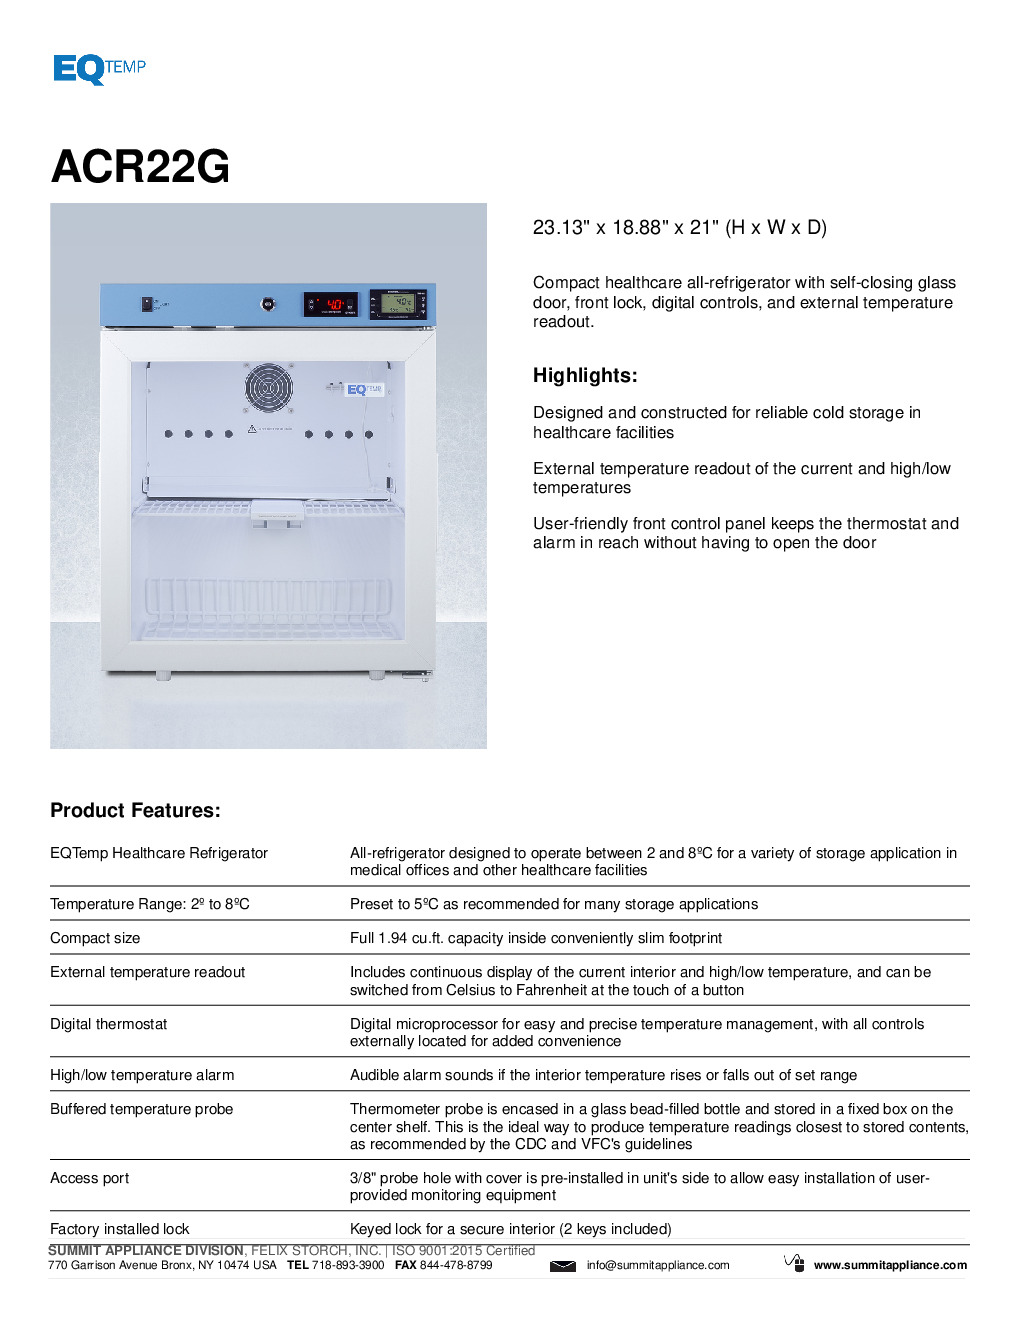 Summit ACR22G Medical Refrigerator